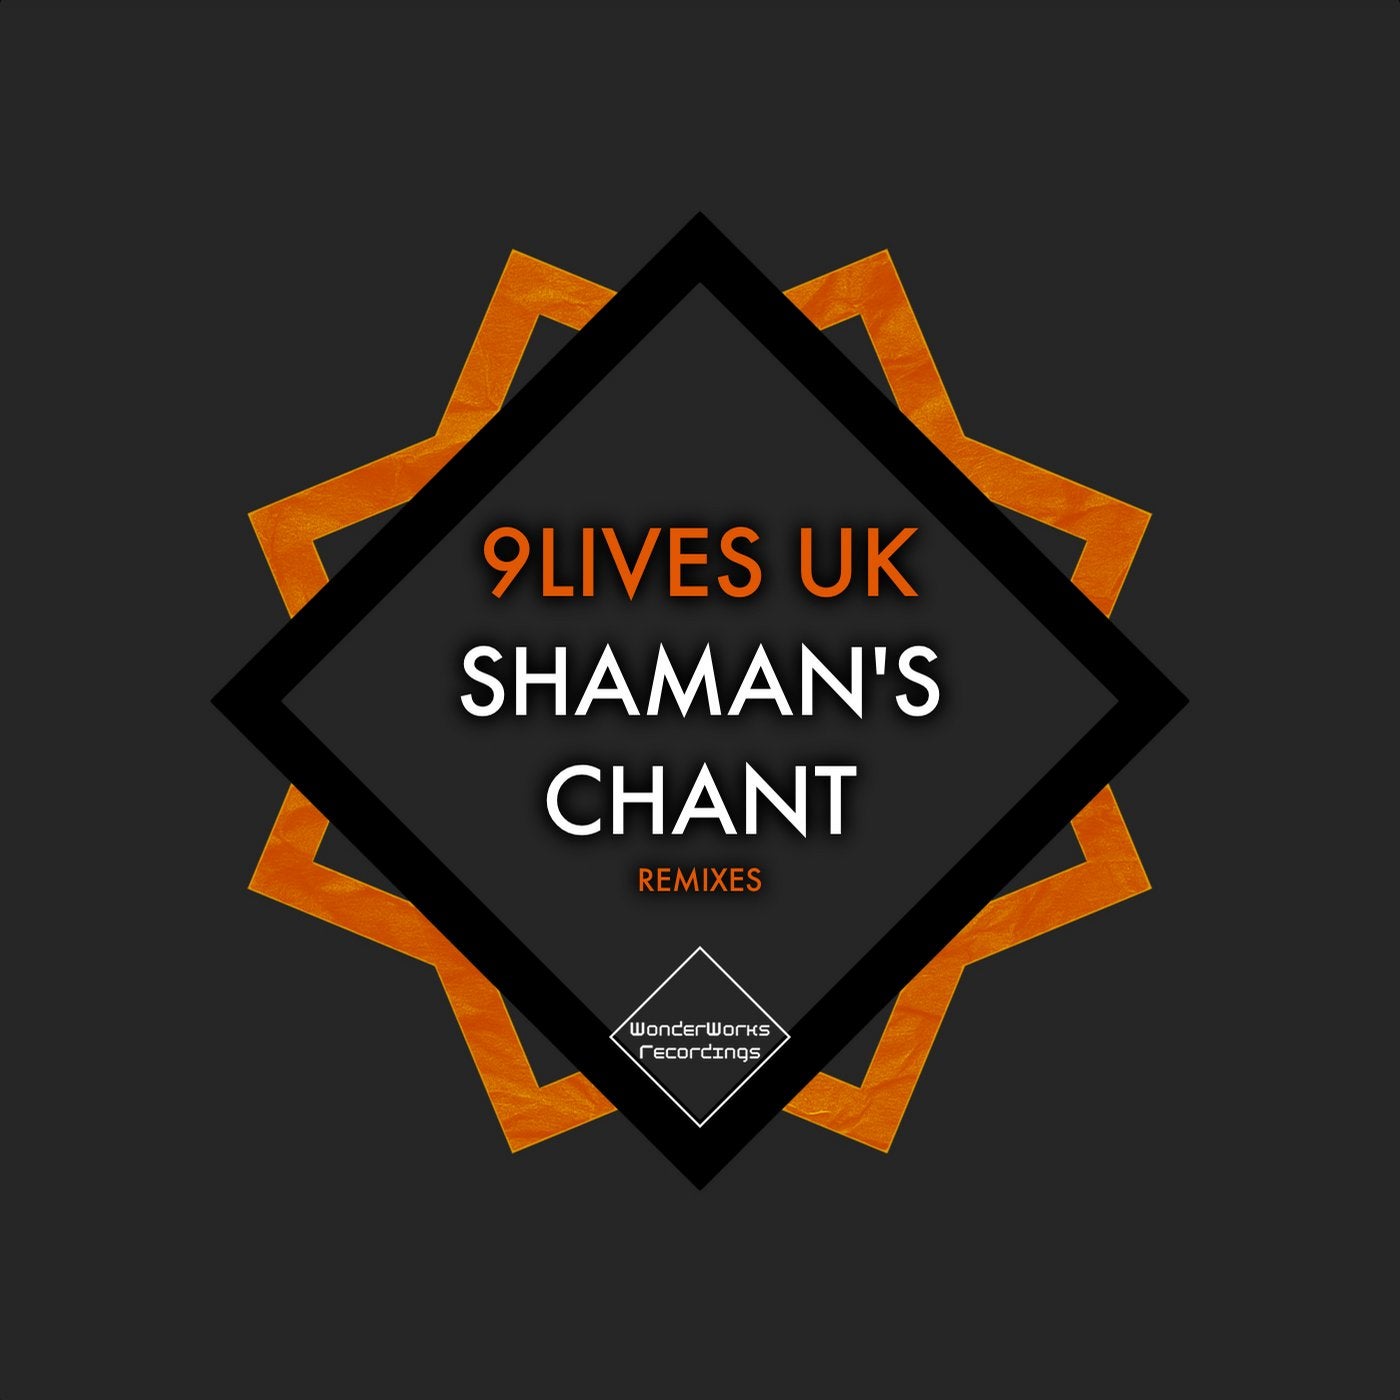 Shaman's Chant